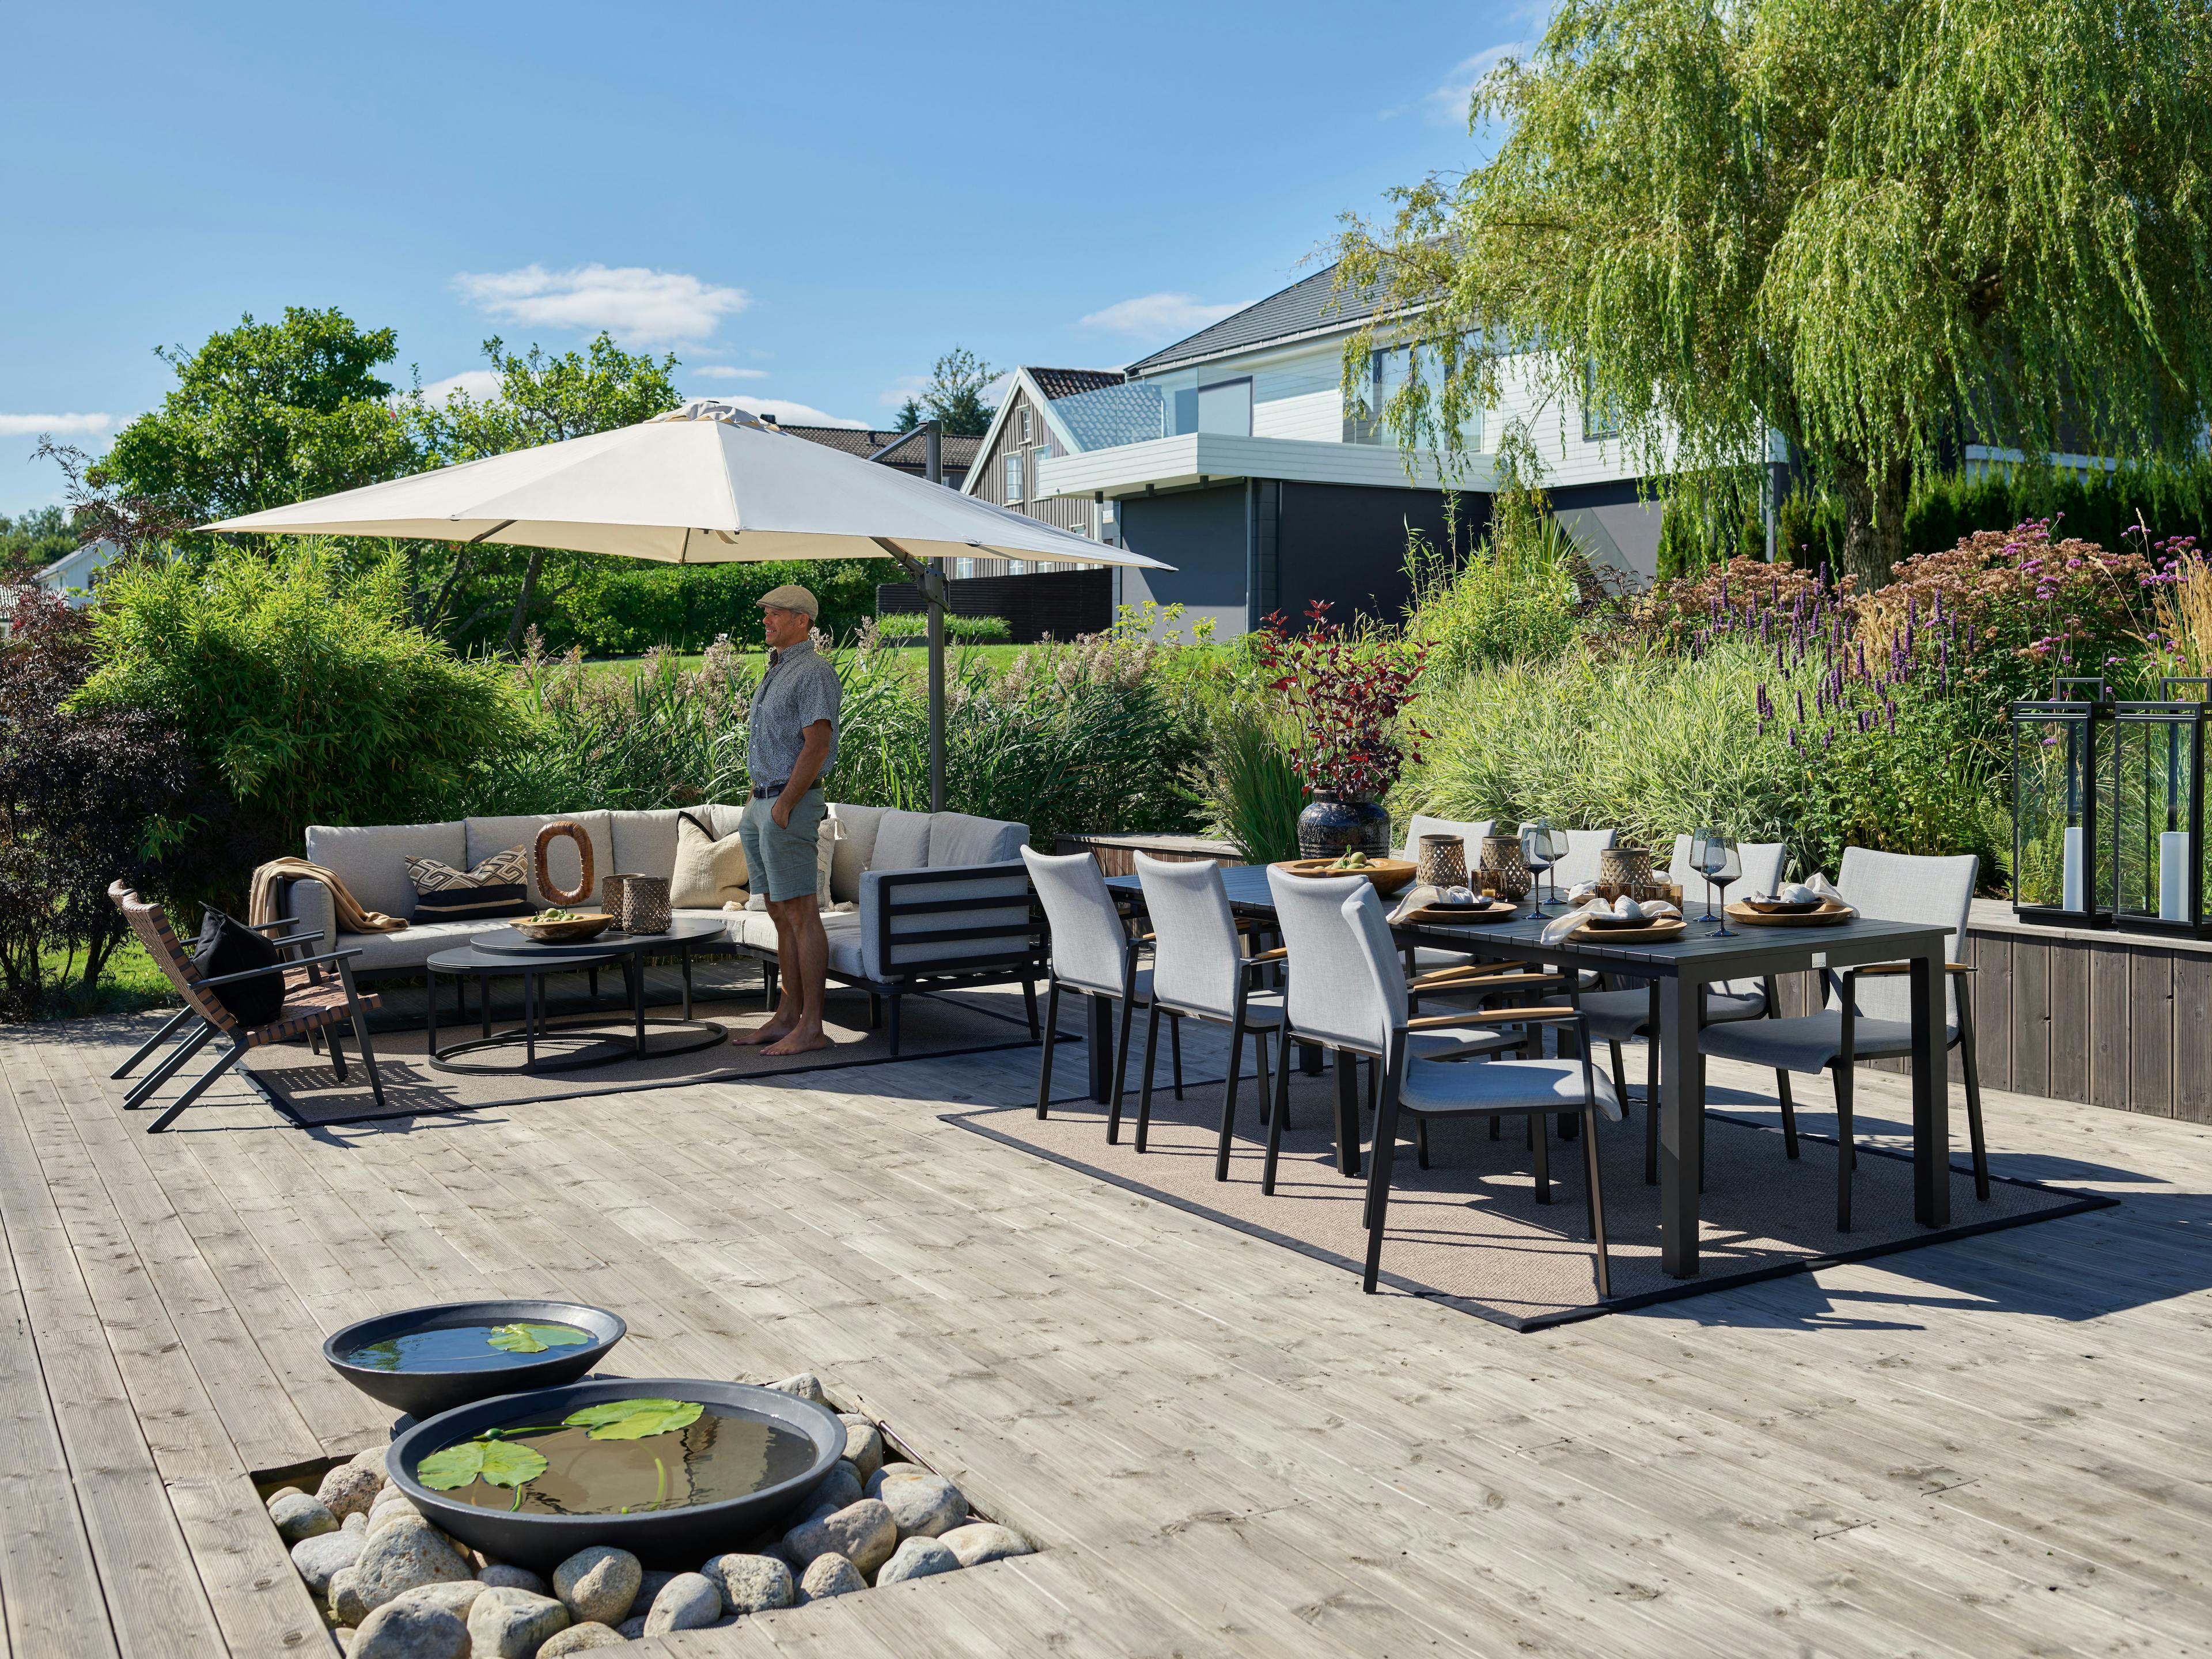 Hage med hagemøbler slik som hagesofa, utendørs spisebord, vannspeil og parasoll.